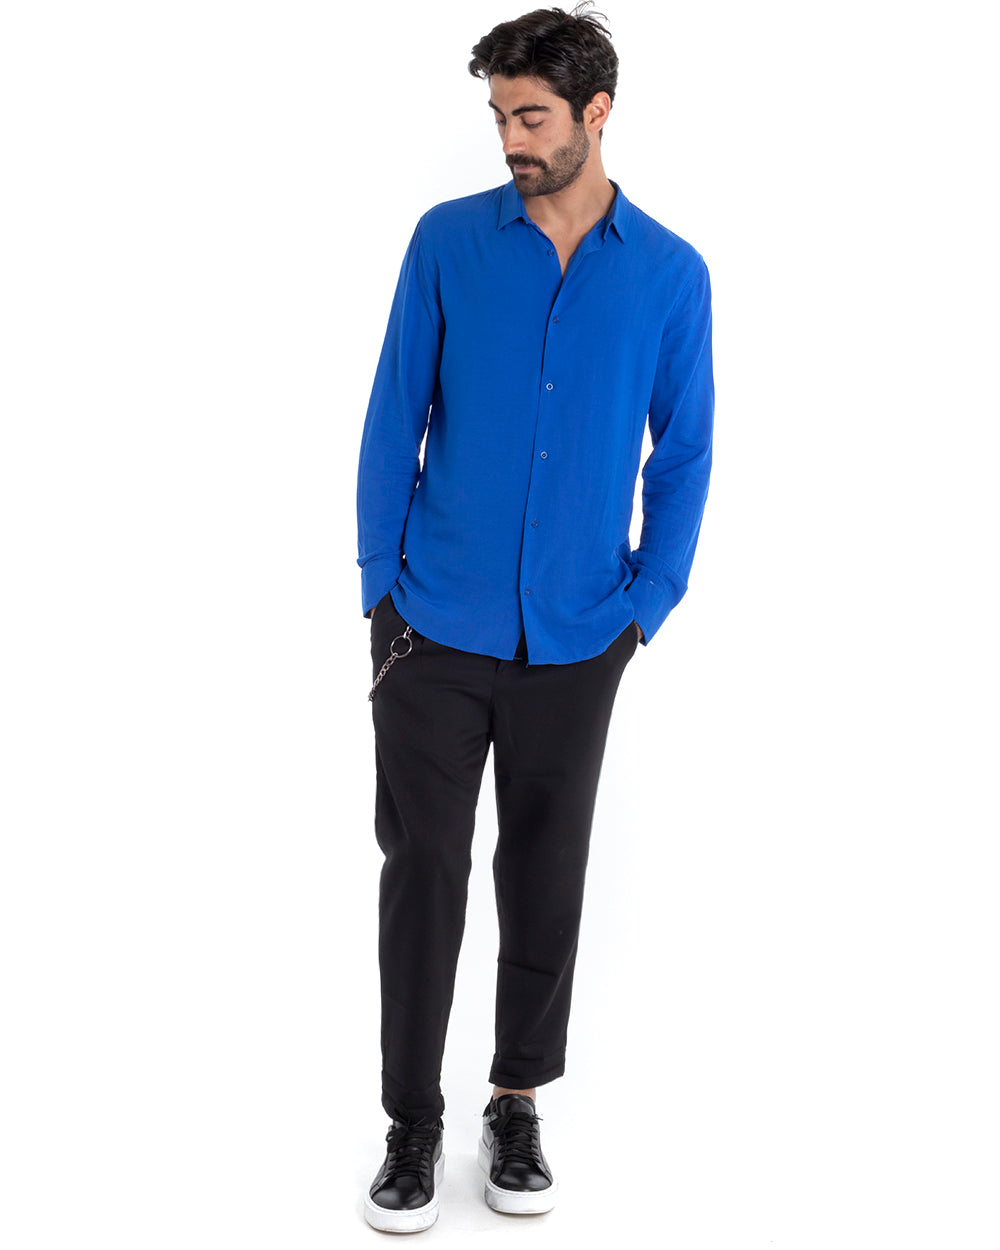 Men's Tailored Shirt With Collar Long Sleeve Basic Soft Viscose Royal Blue GIOSAL-C2362A